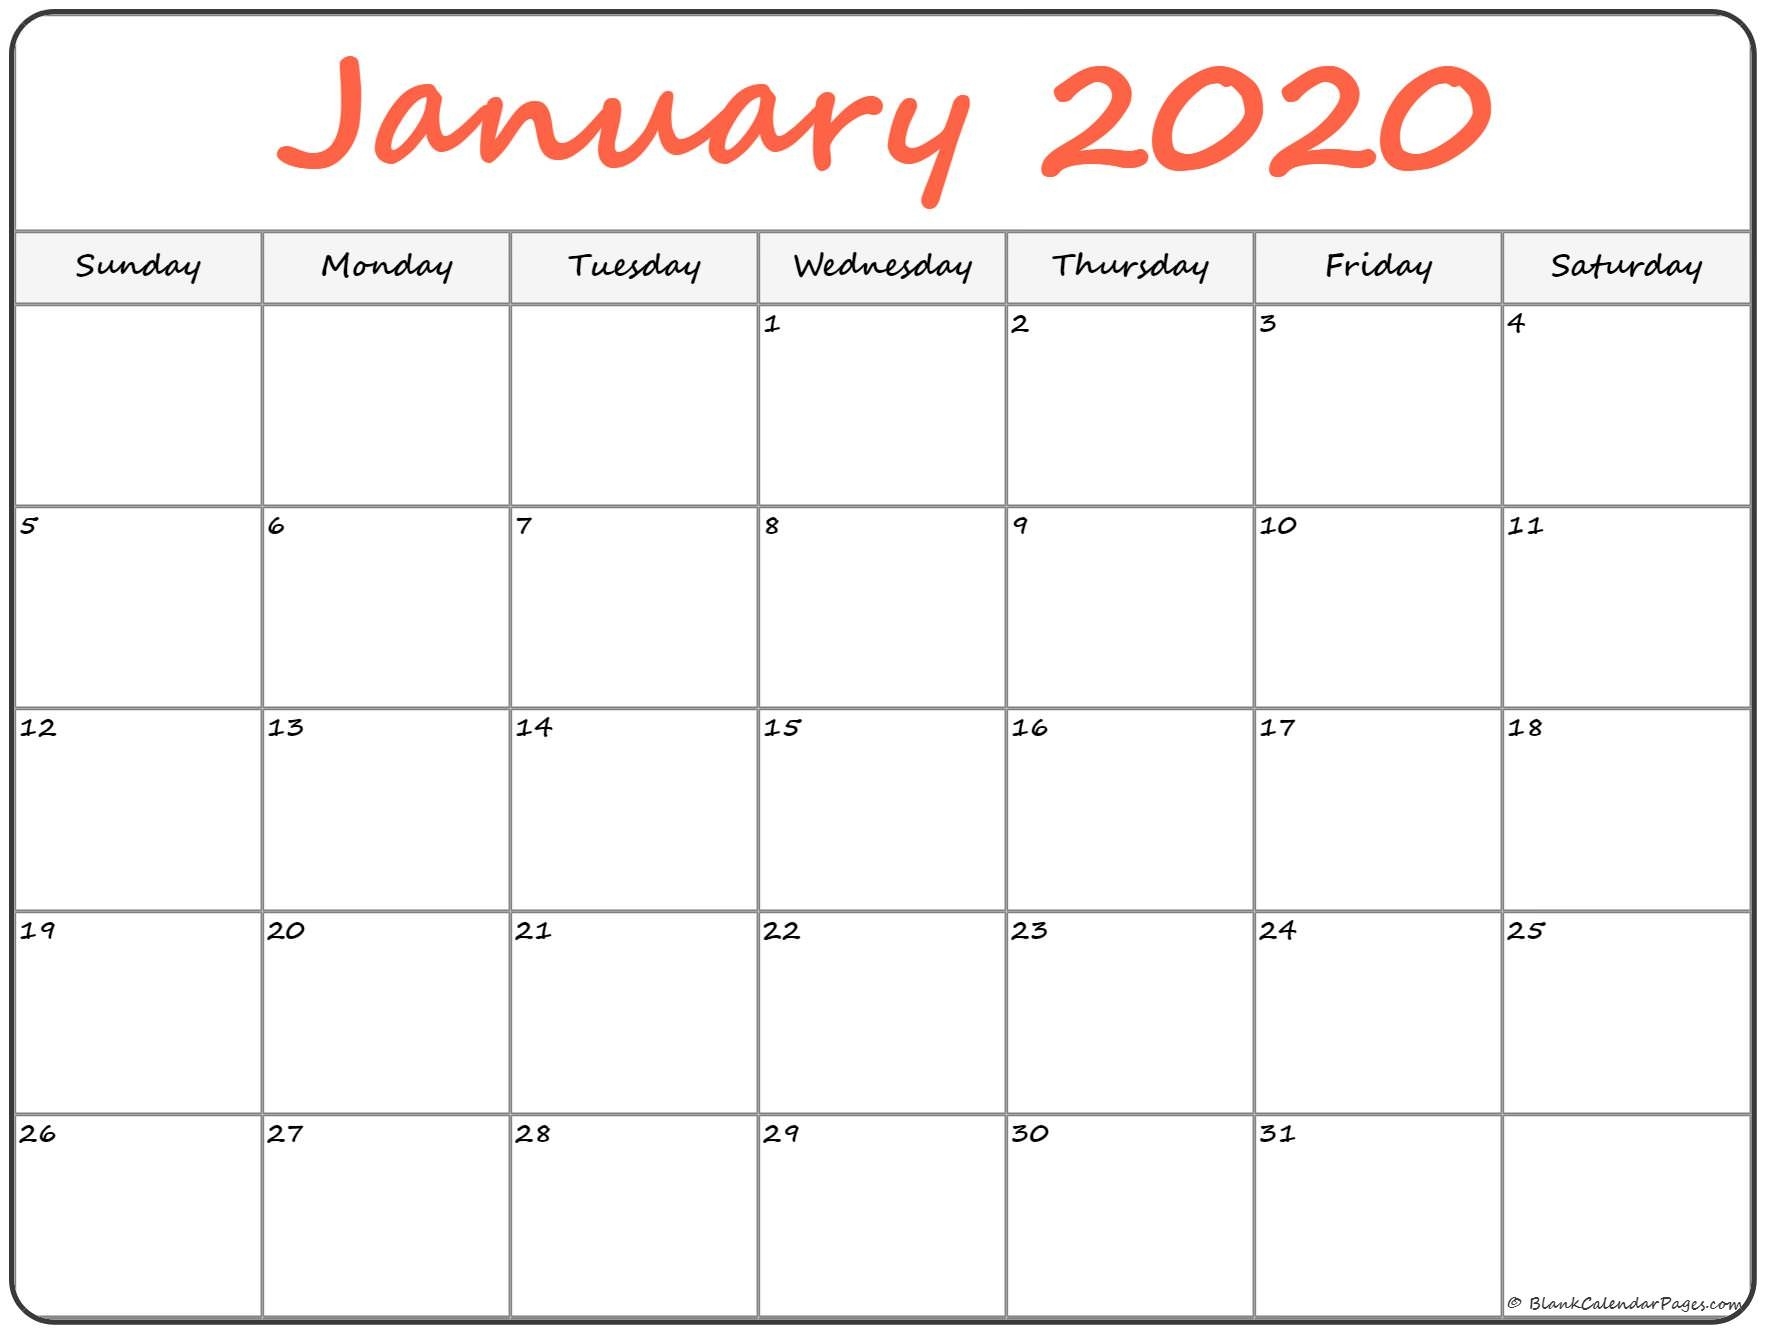 January 2020 Calendar | Free Printable Monthly Calendars-Pretty January 2020 Calendar